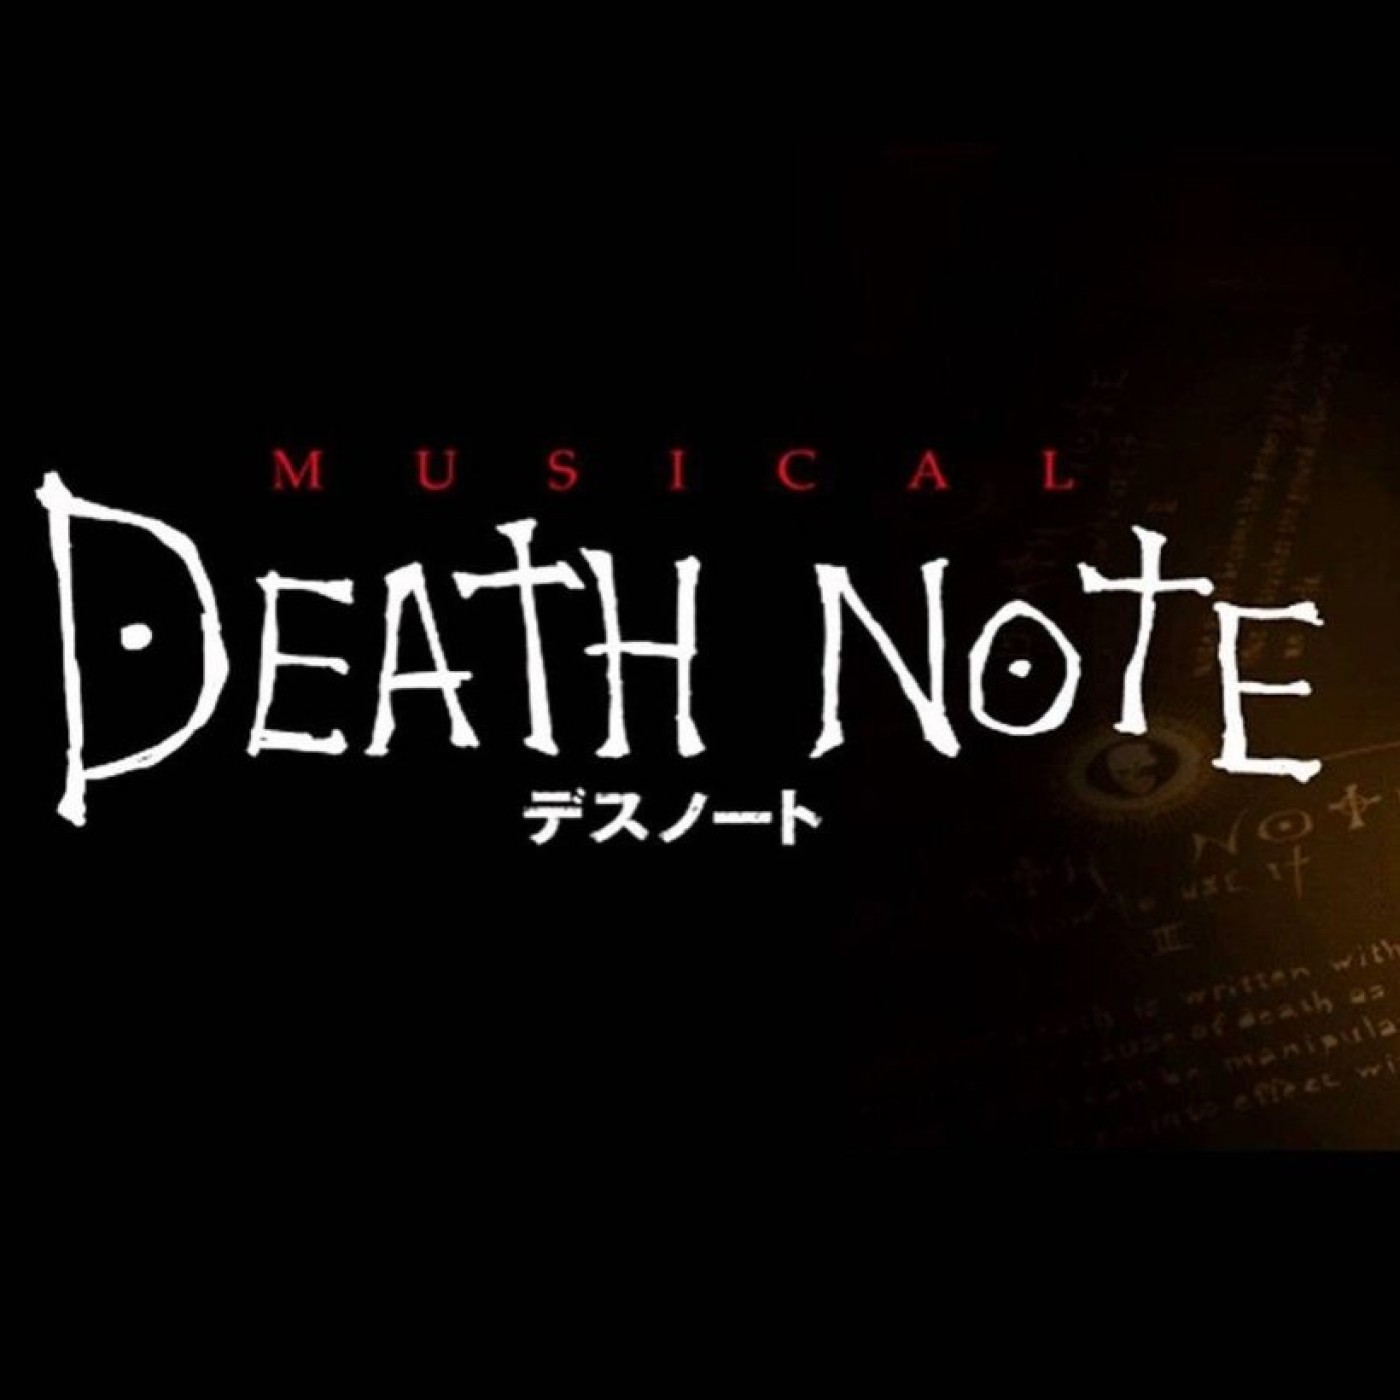 آهنگ انیمه Death note [دفترچه مرگ]